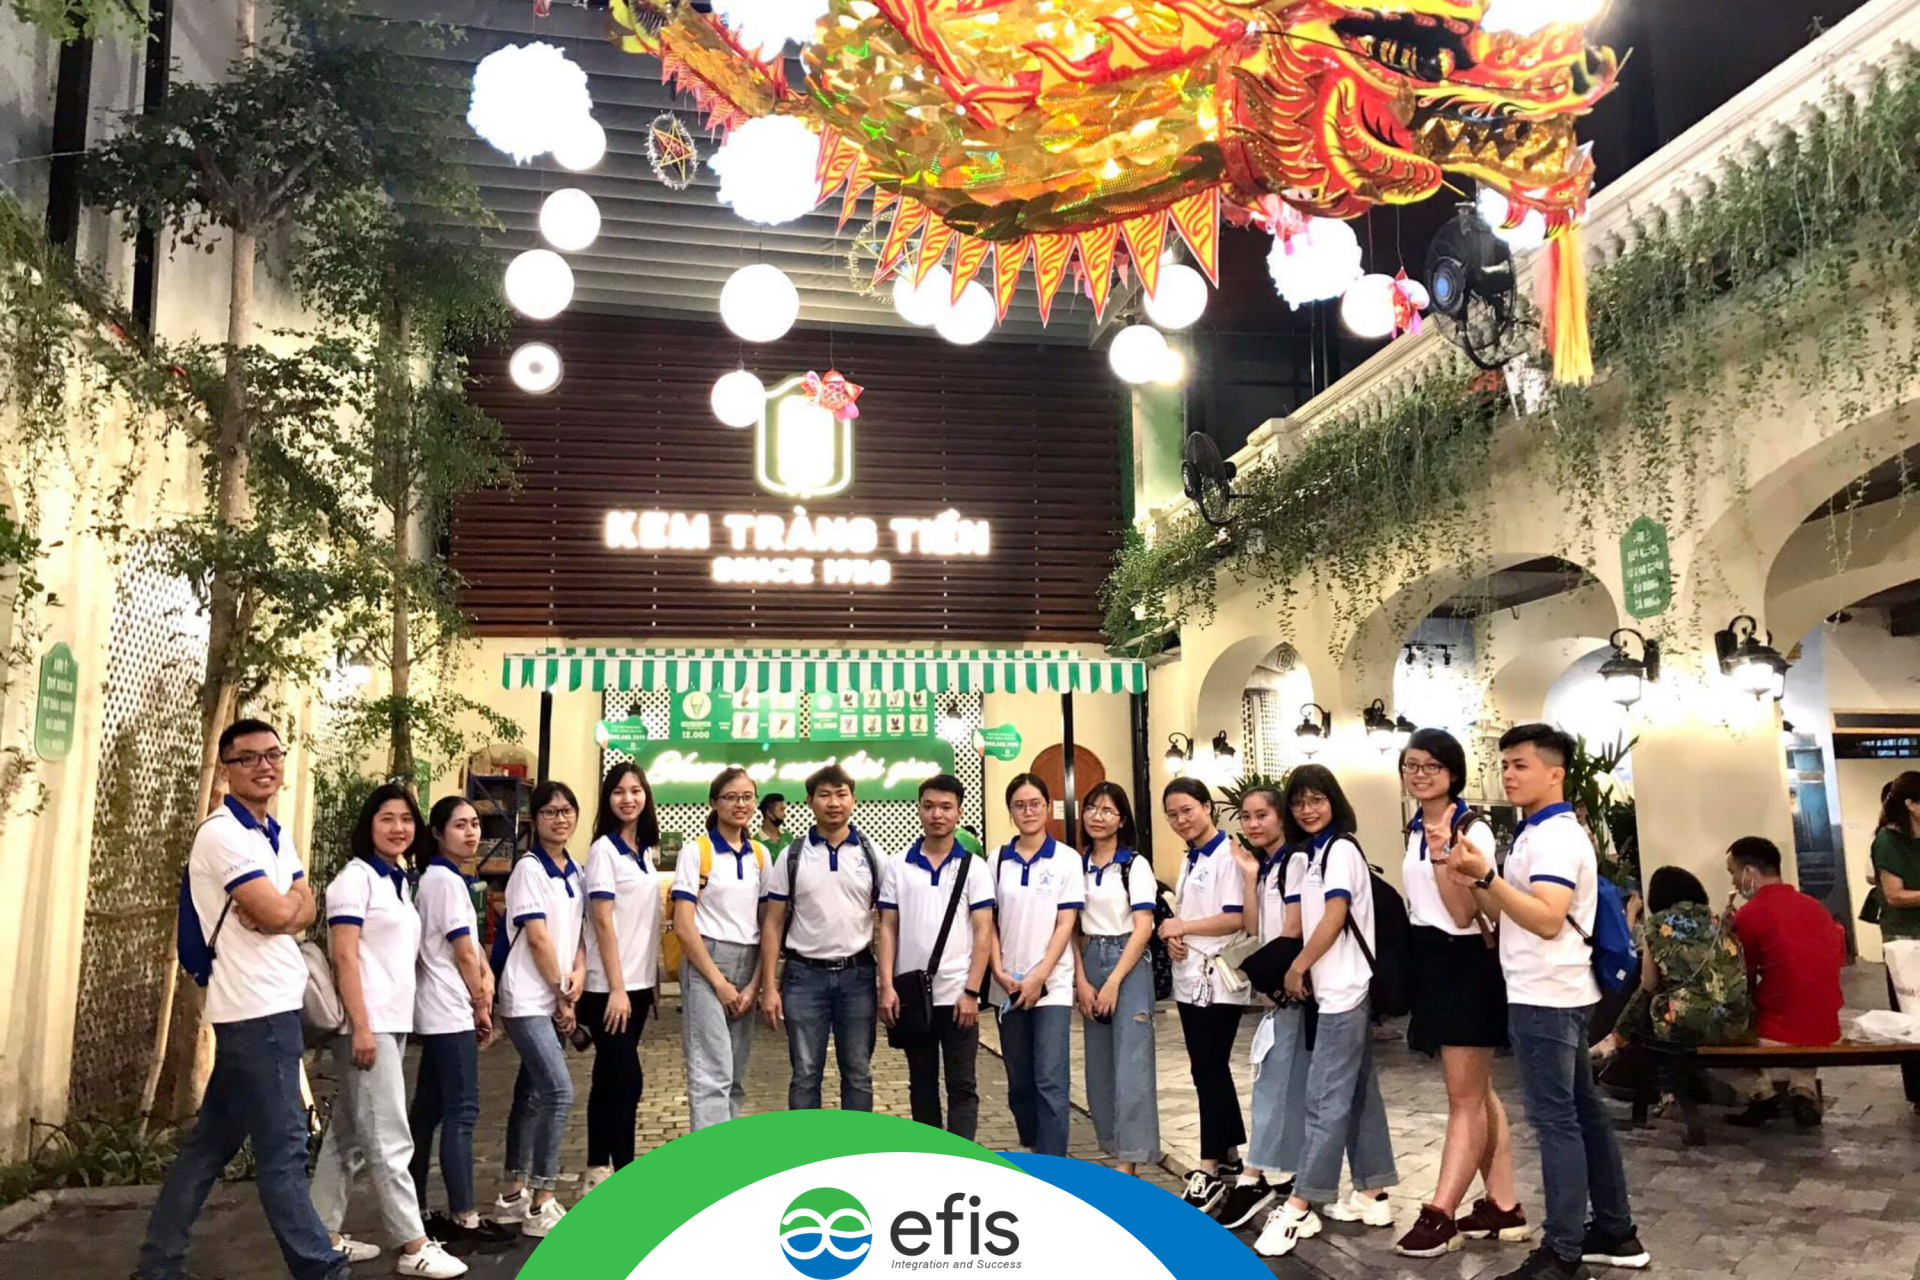 câu chuyện ra đời của hanoi free private tour guide efis english dẫn tour học tiếng anh